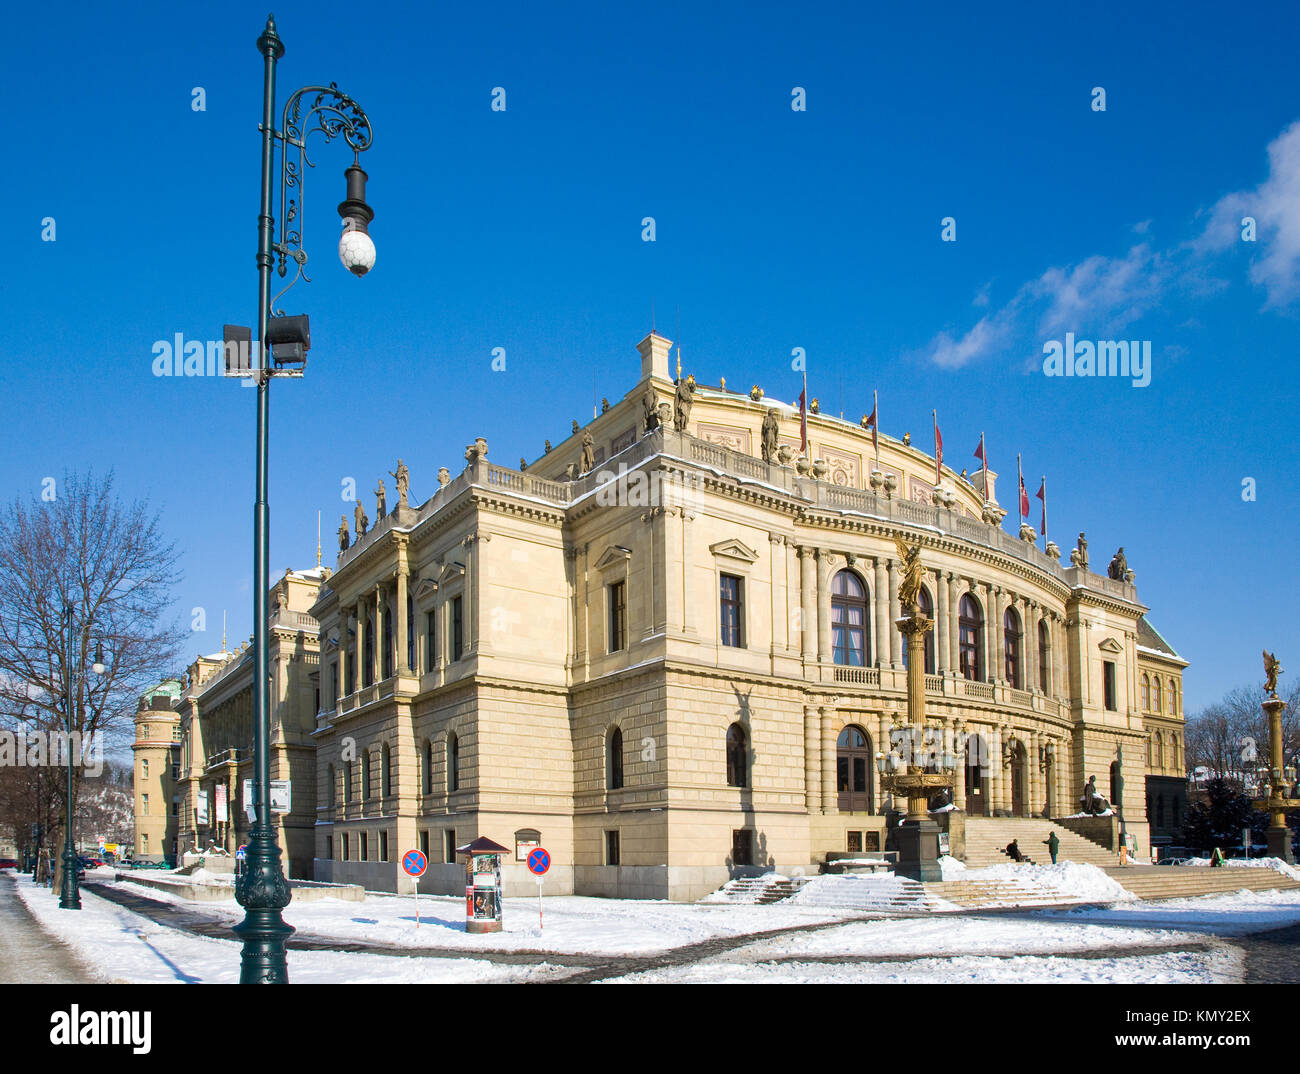 Rudolfinum, Alsovo nabrezi, Stare Mesto (UNESCO), Praha, Ceska republika / Rudolfinum, città vecchia, Praga, Repubblica Ceca Foto Stock